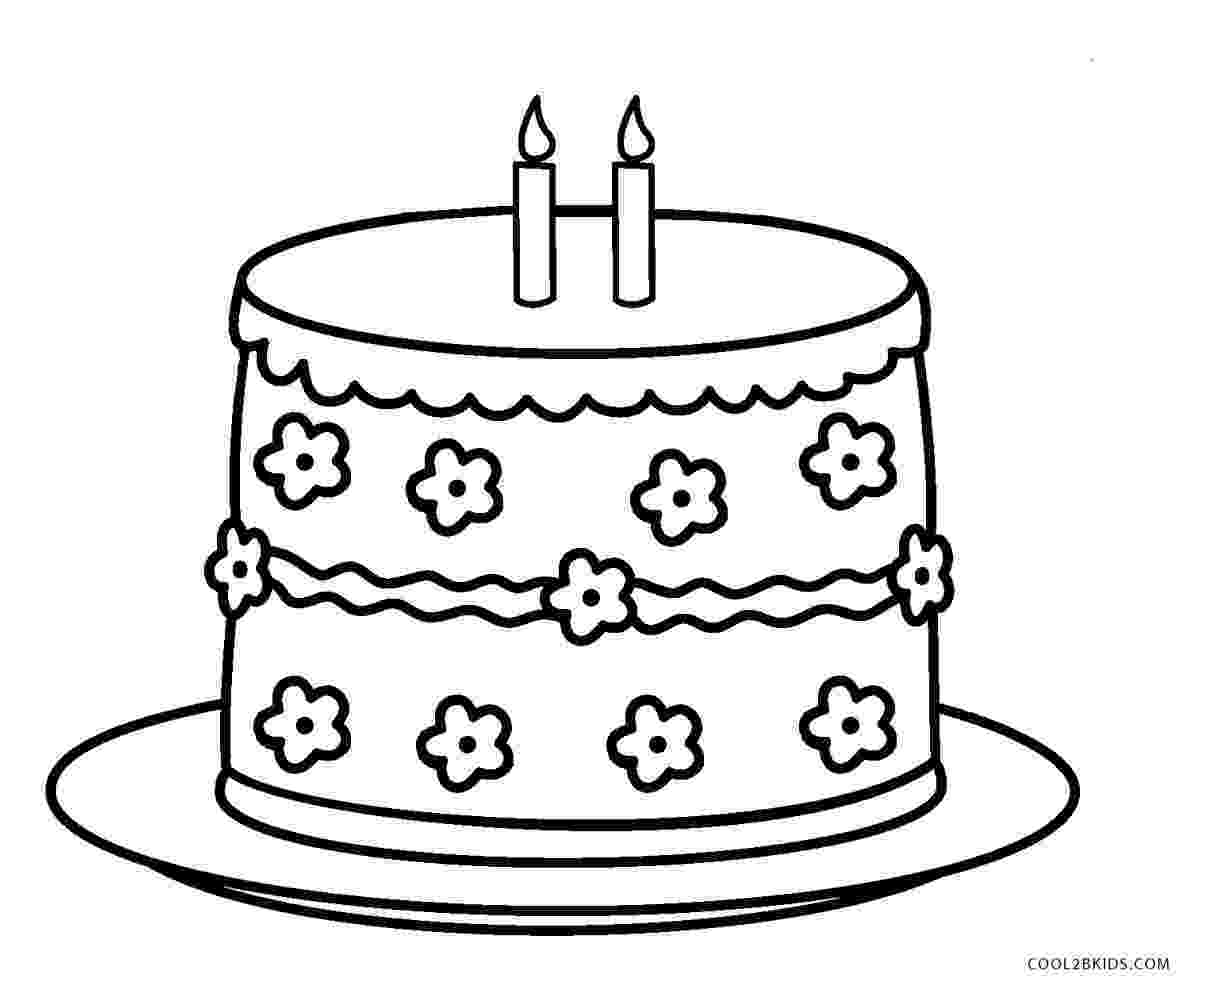 cake coloring page free printable birthday cake coloring pages for kids cake coloring page 